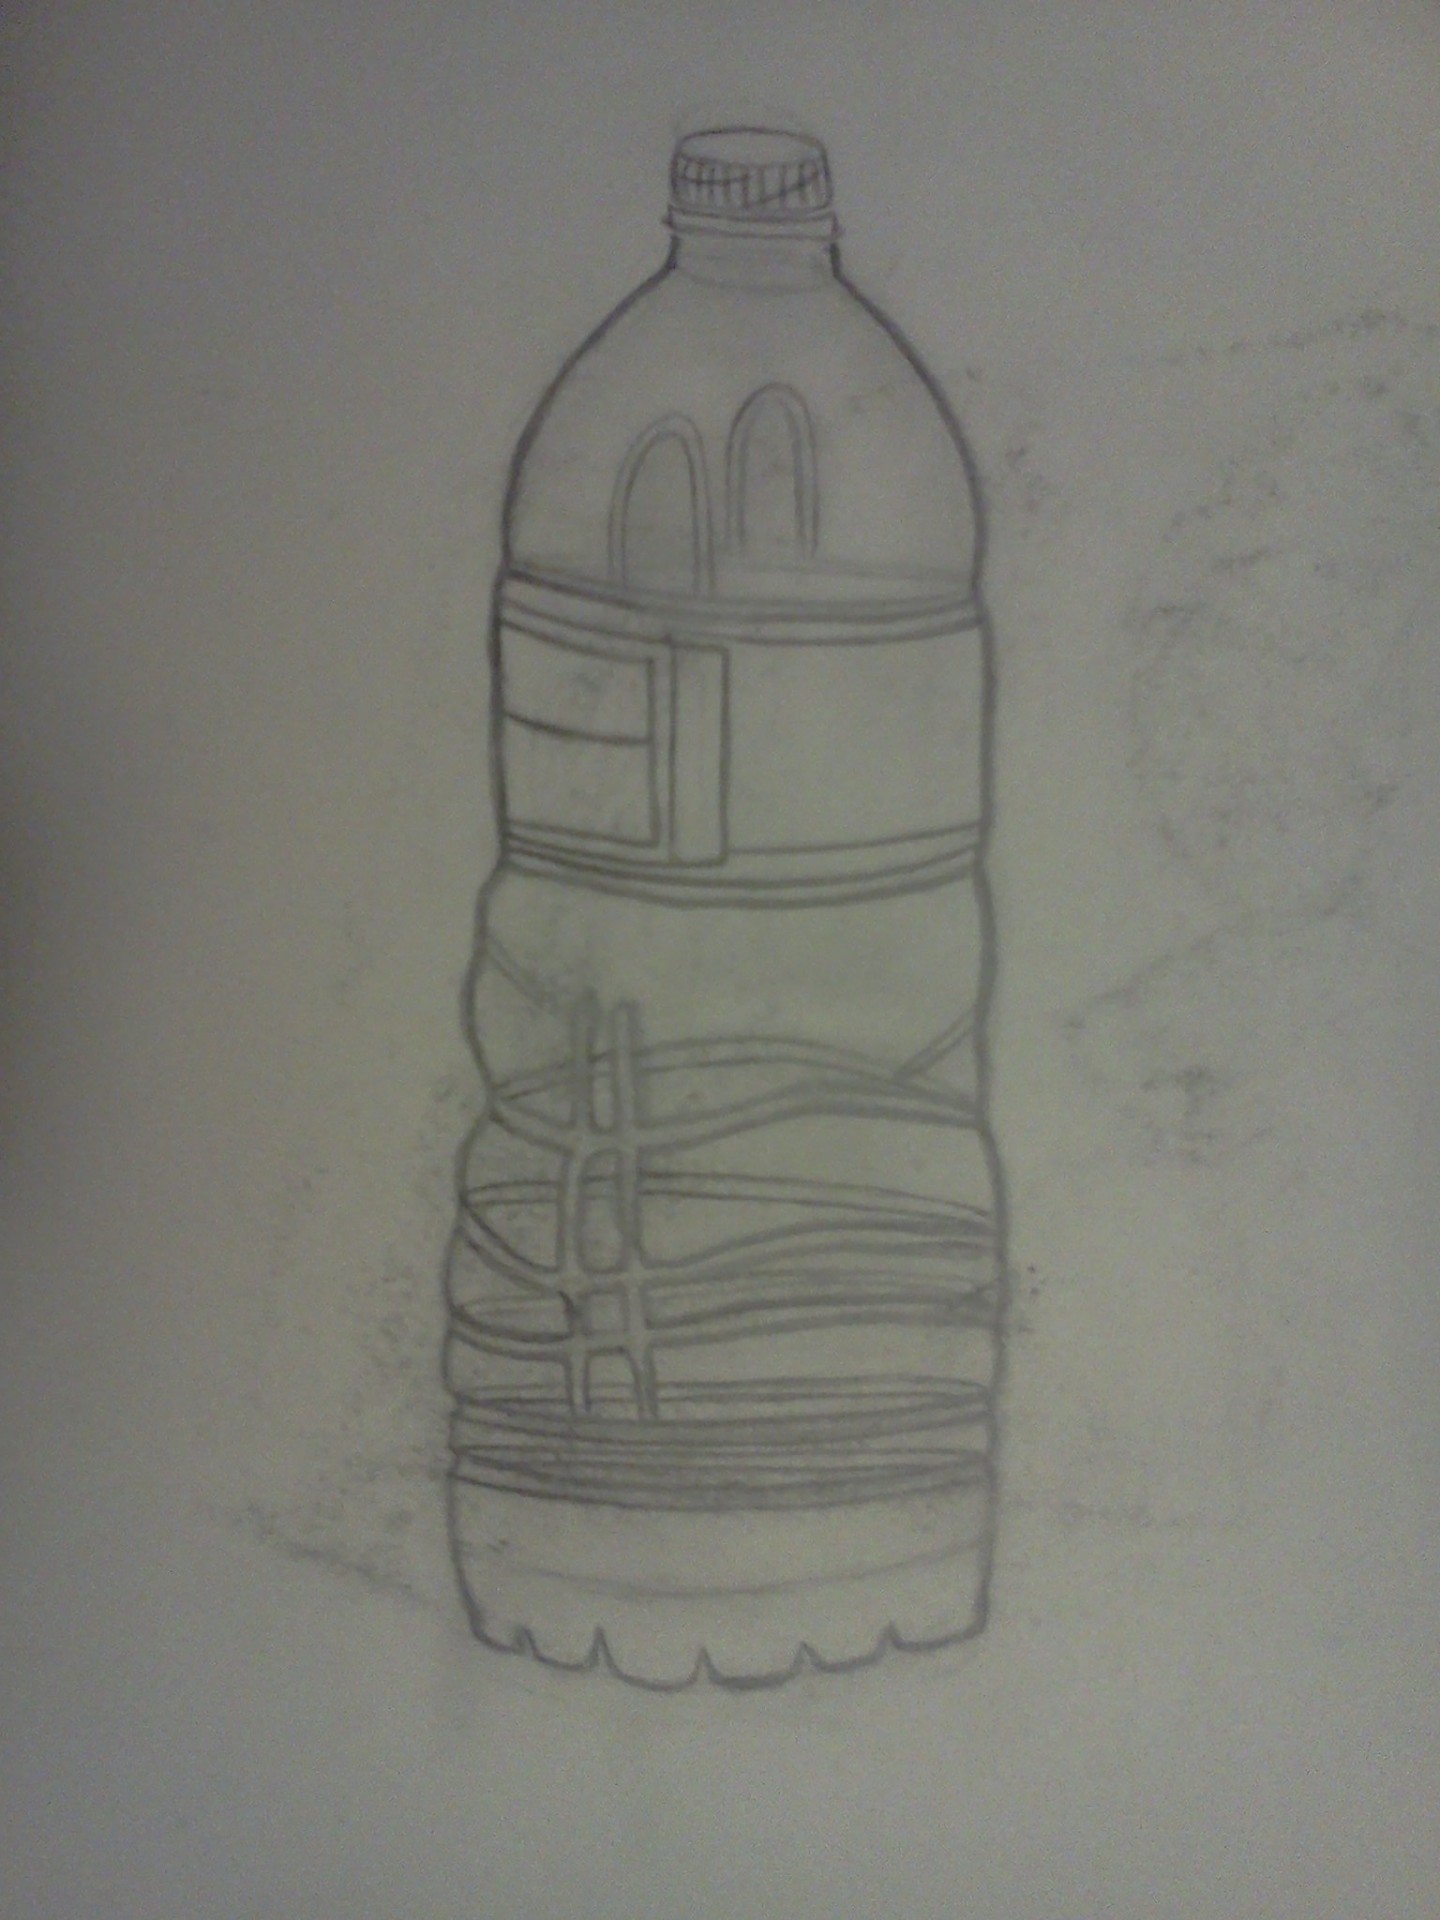 BottlePencil